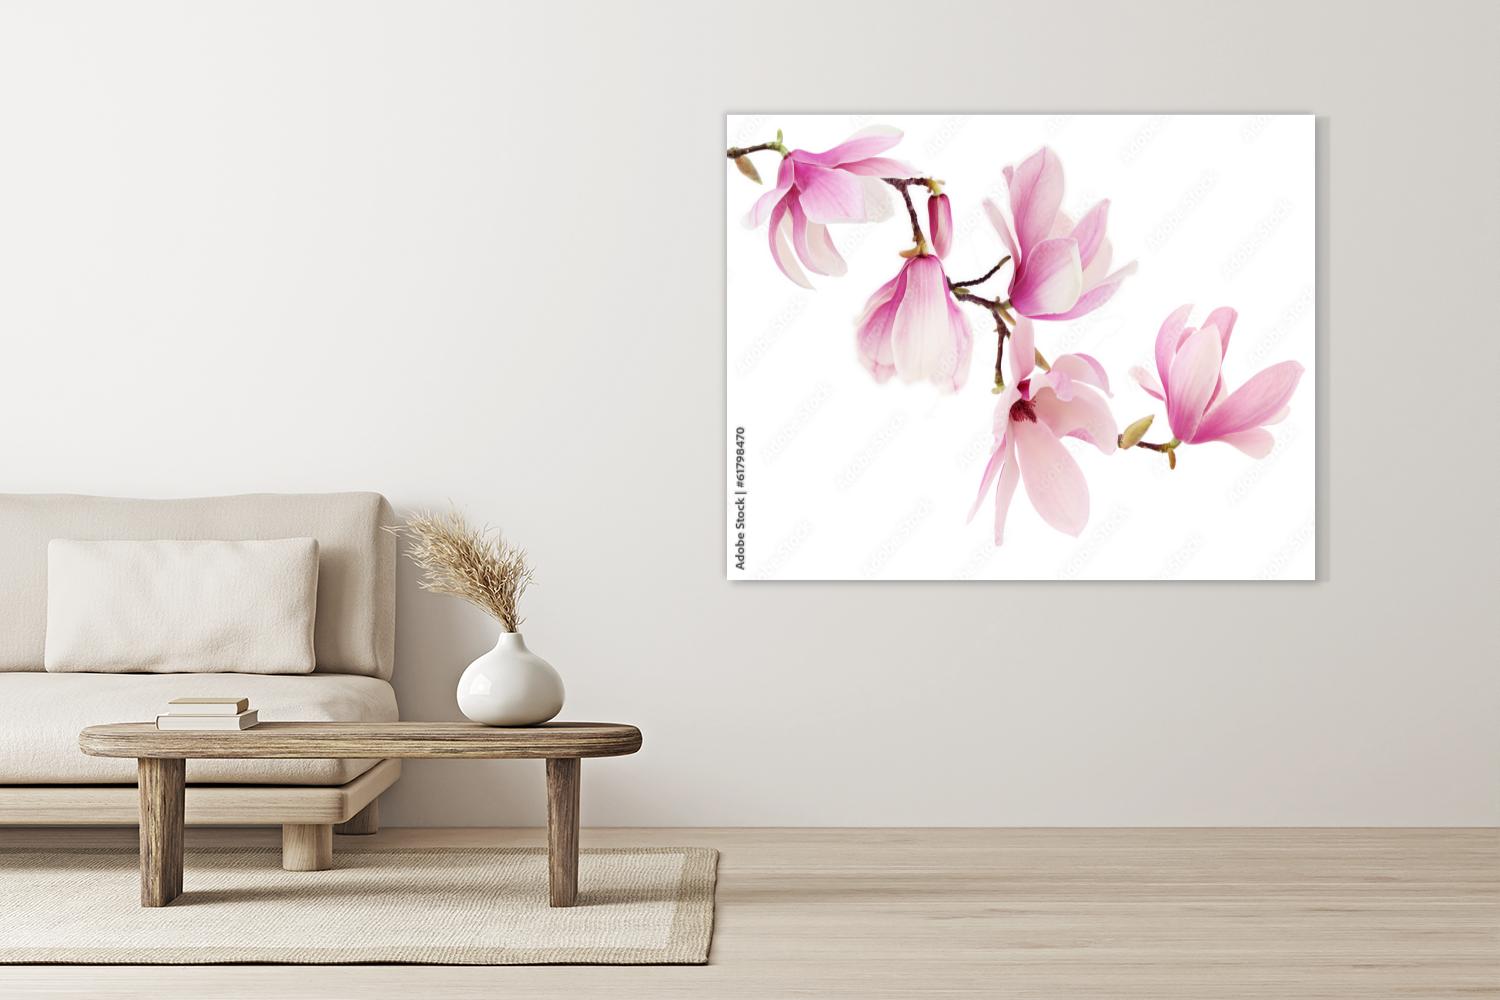 Pink spring magnolia flowers obraz